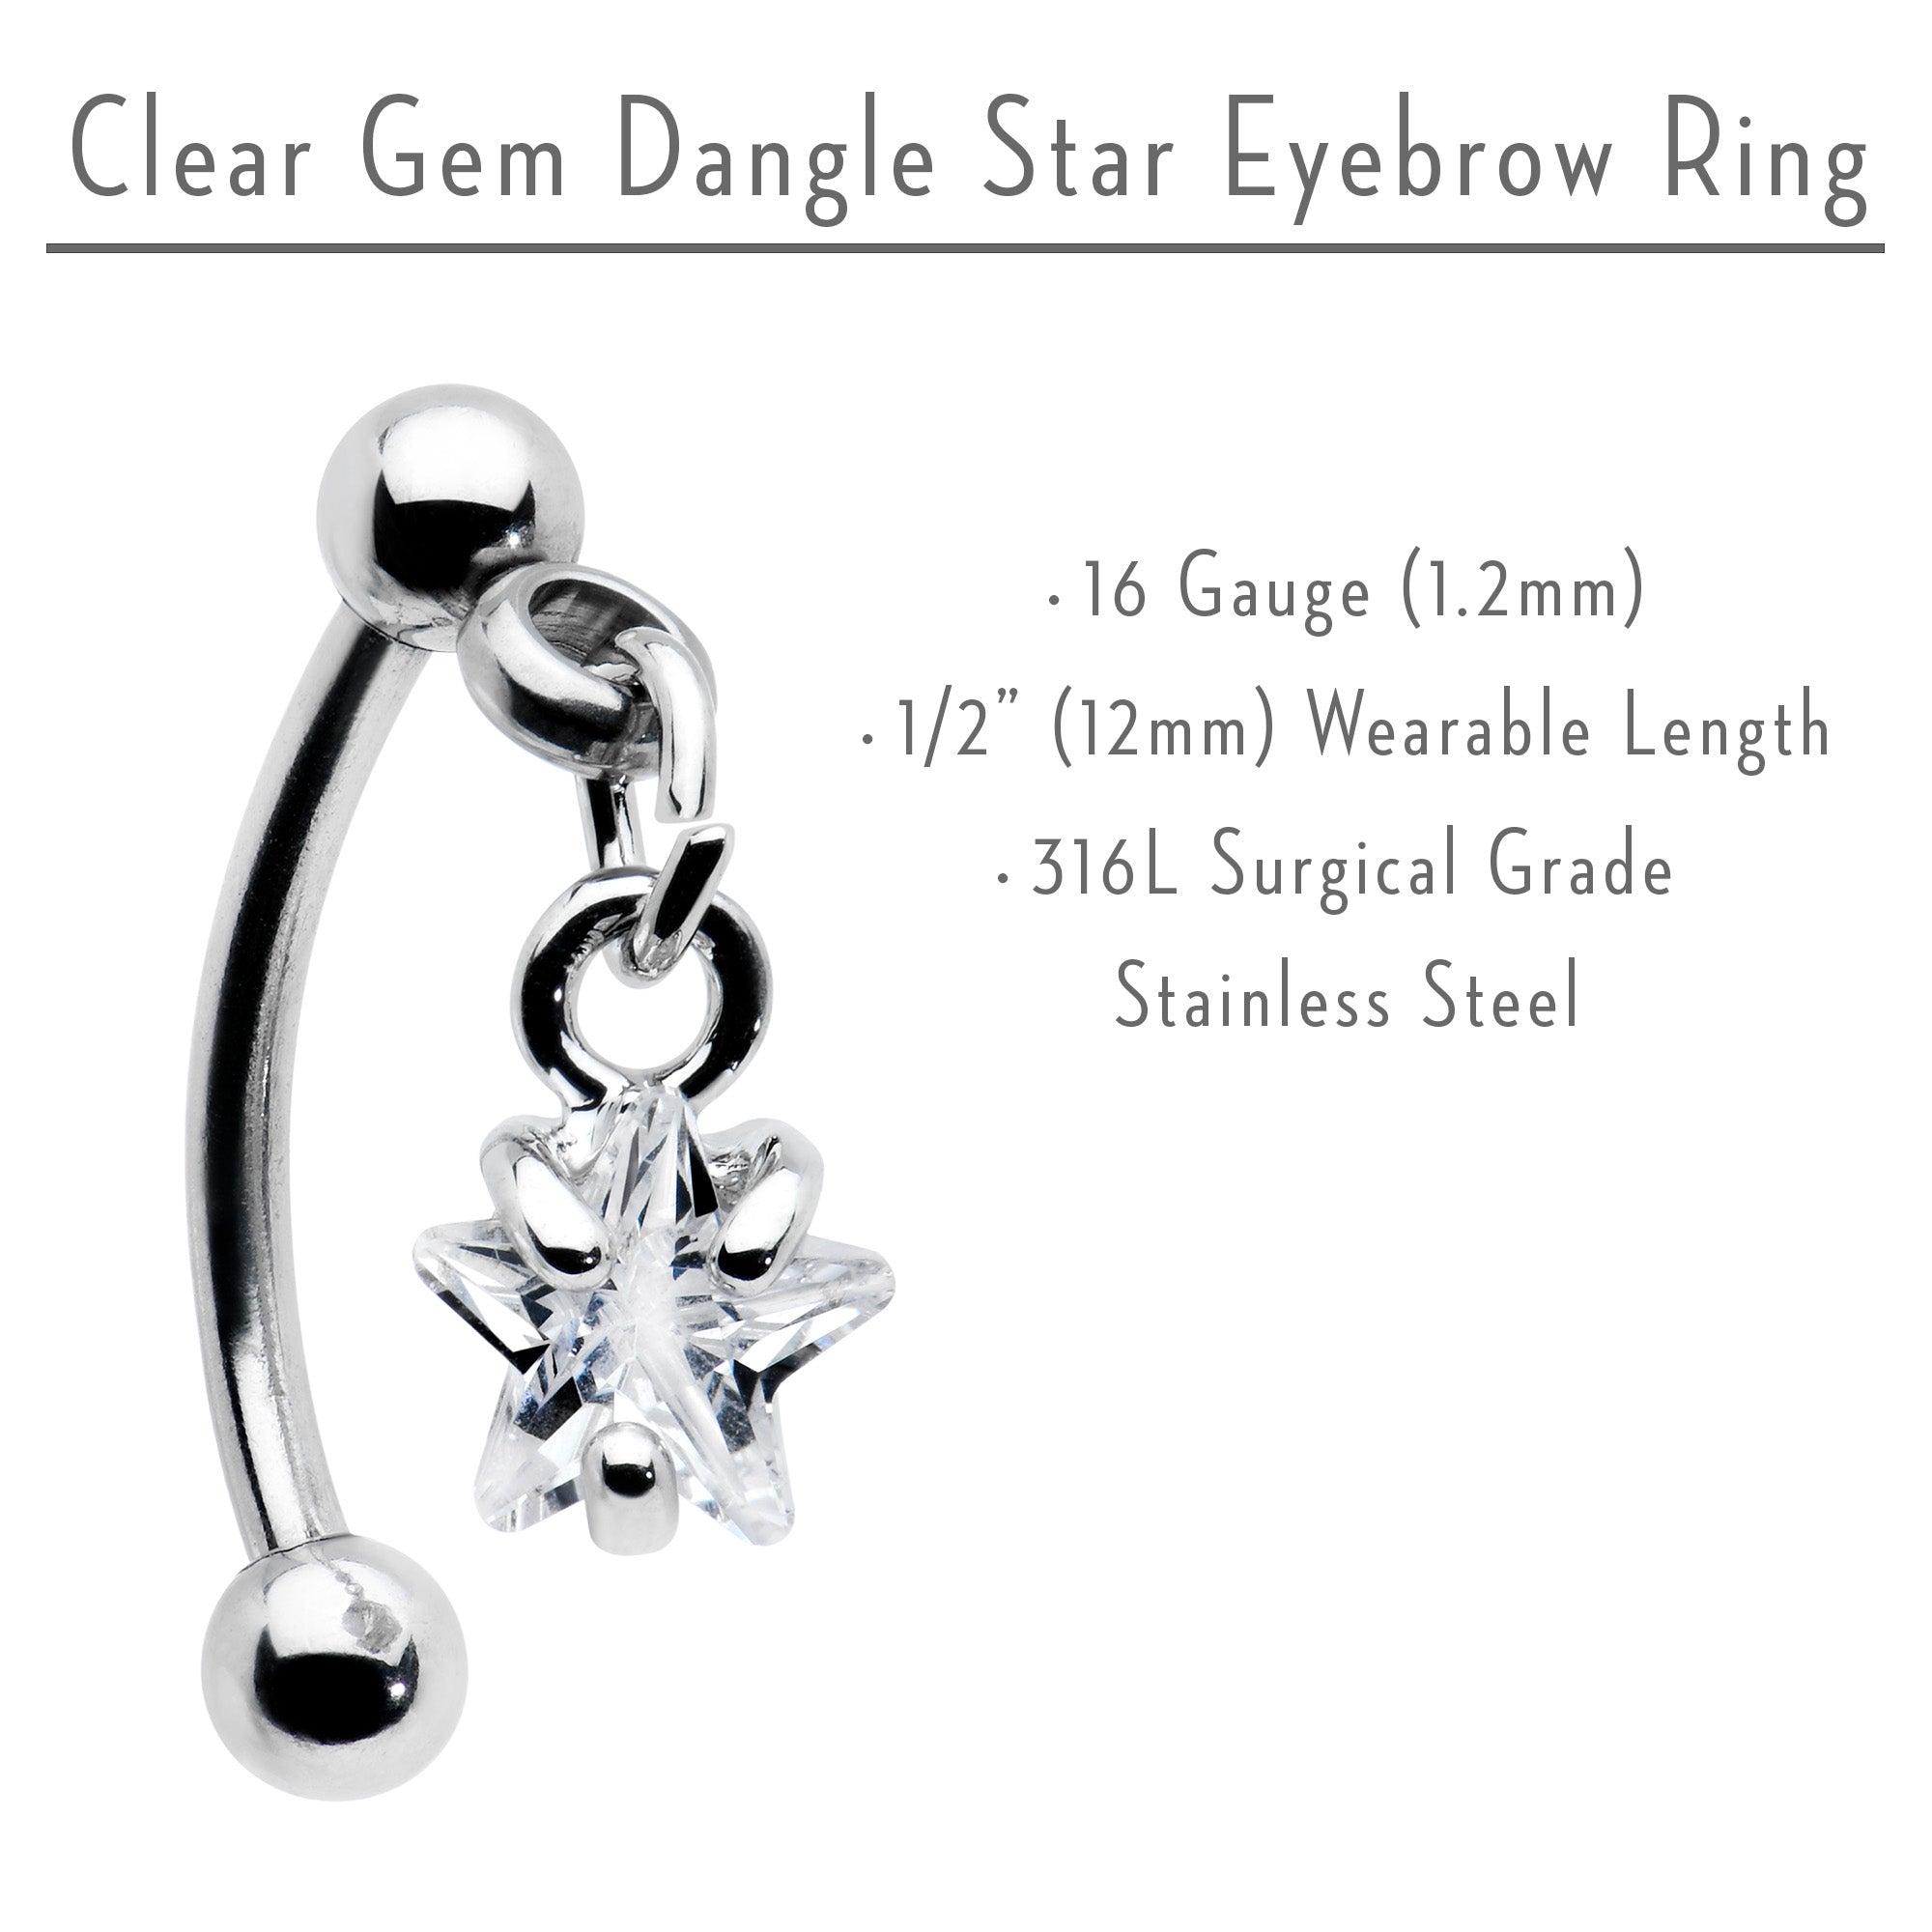 Top Down Clear Gem Dangle Star Eyebrow Ring